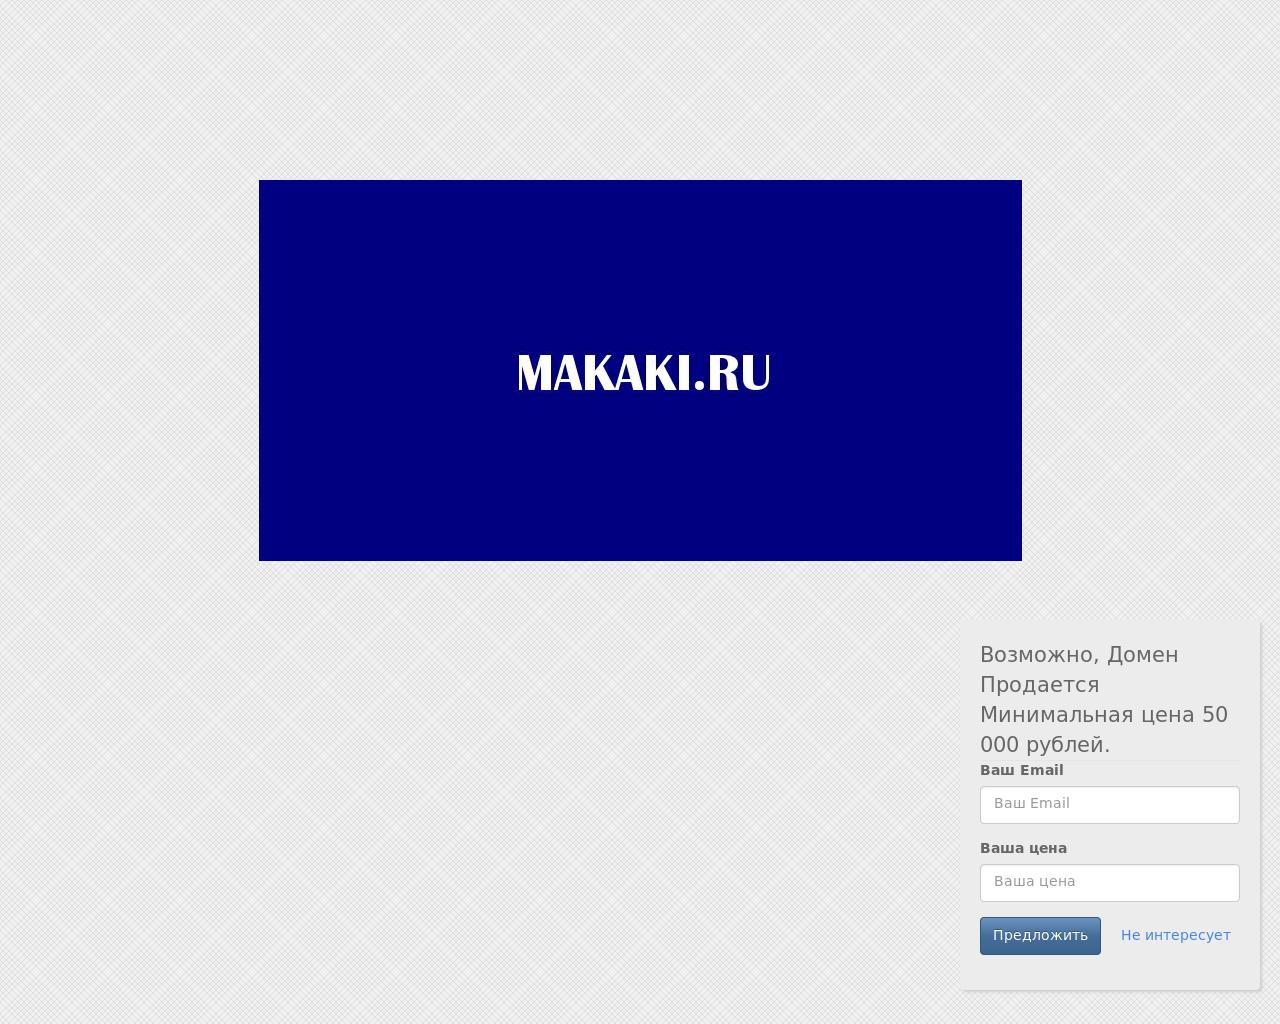 Изображение сайта makaki.ru в разрешении 1280x1024